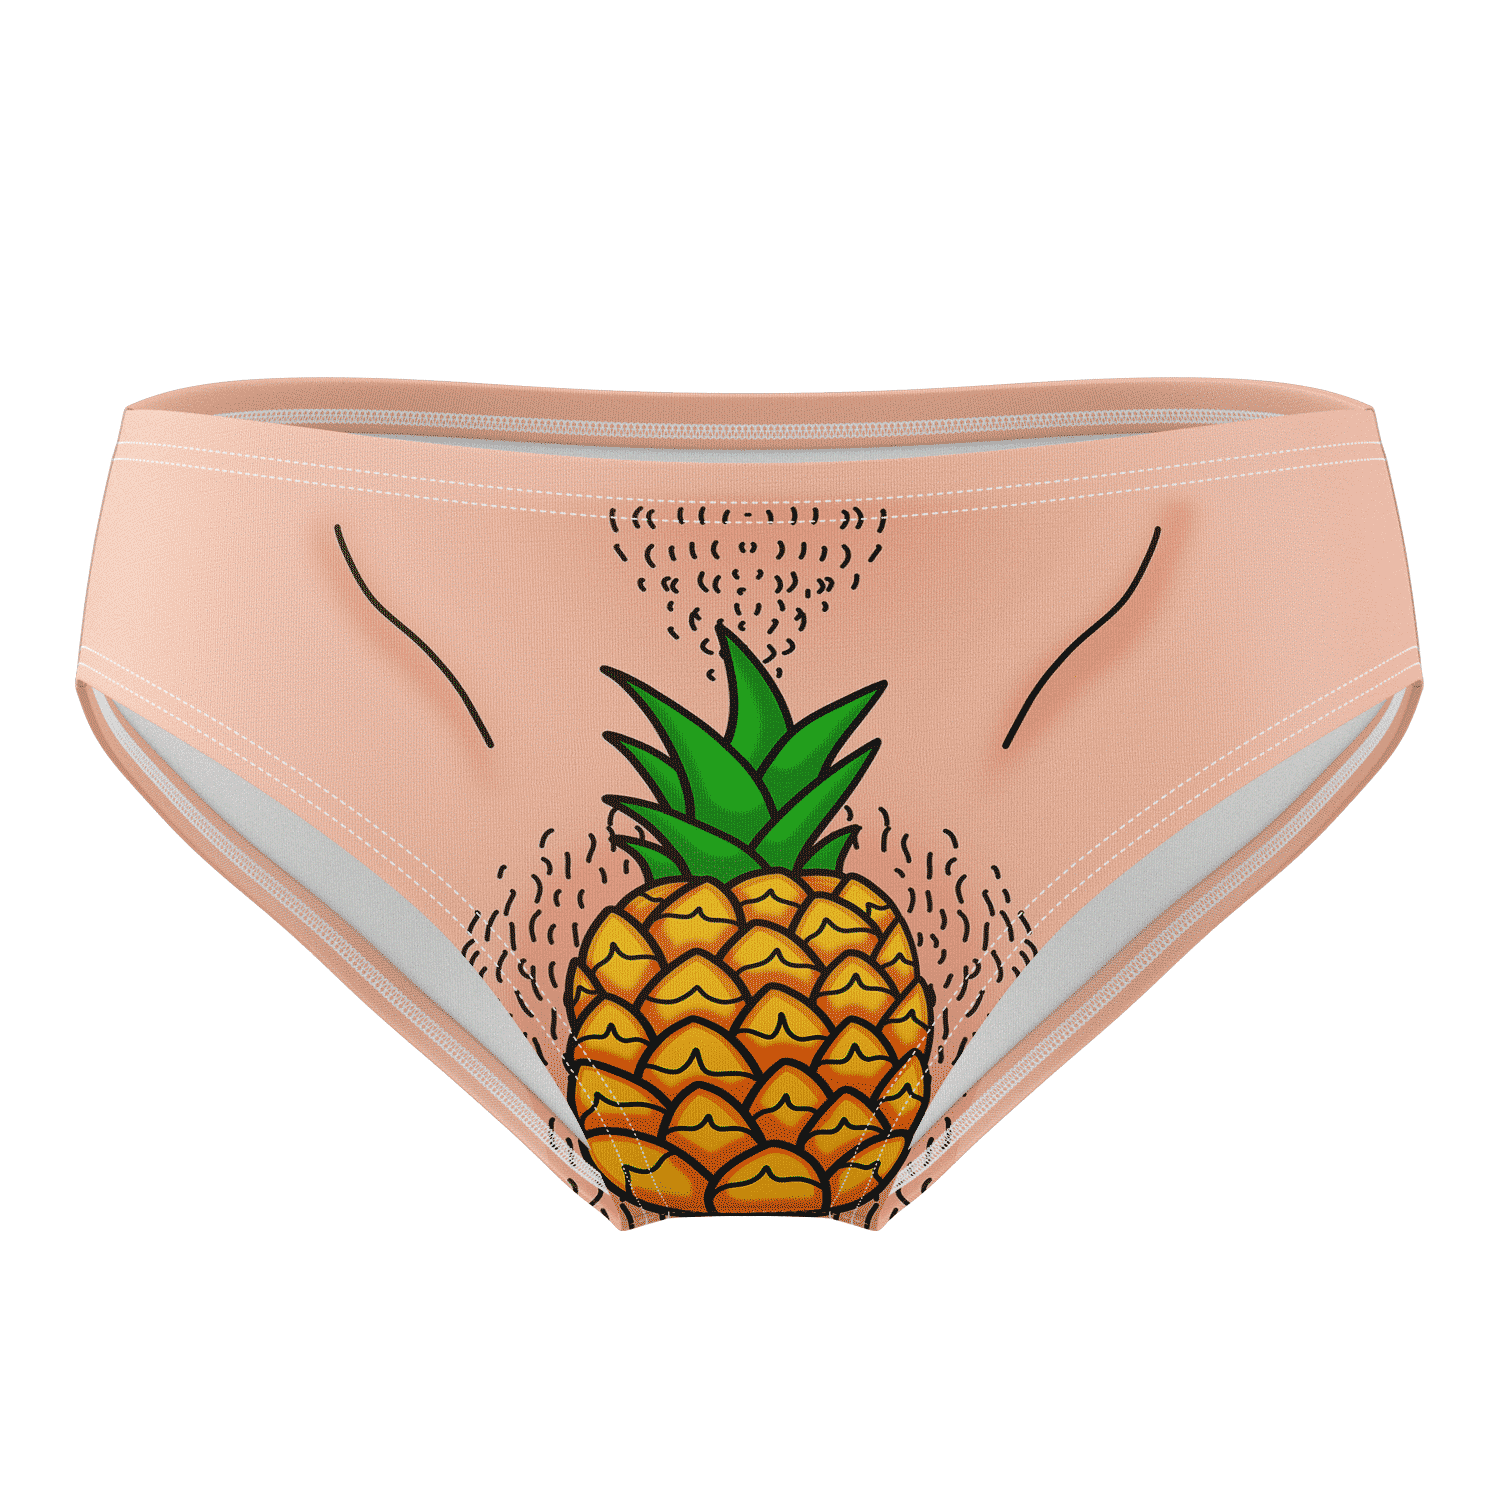 Pineapple Funny Swim Trunks